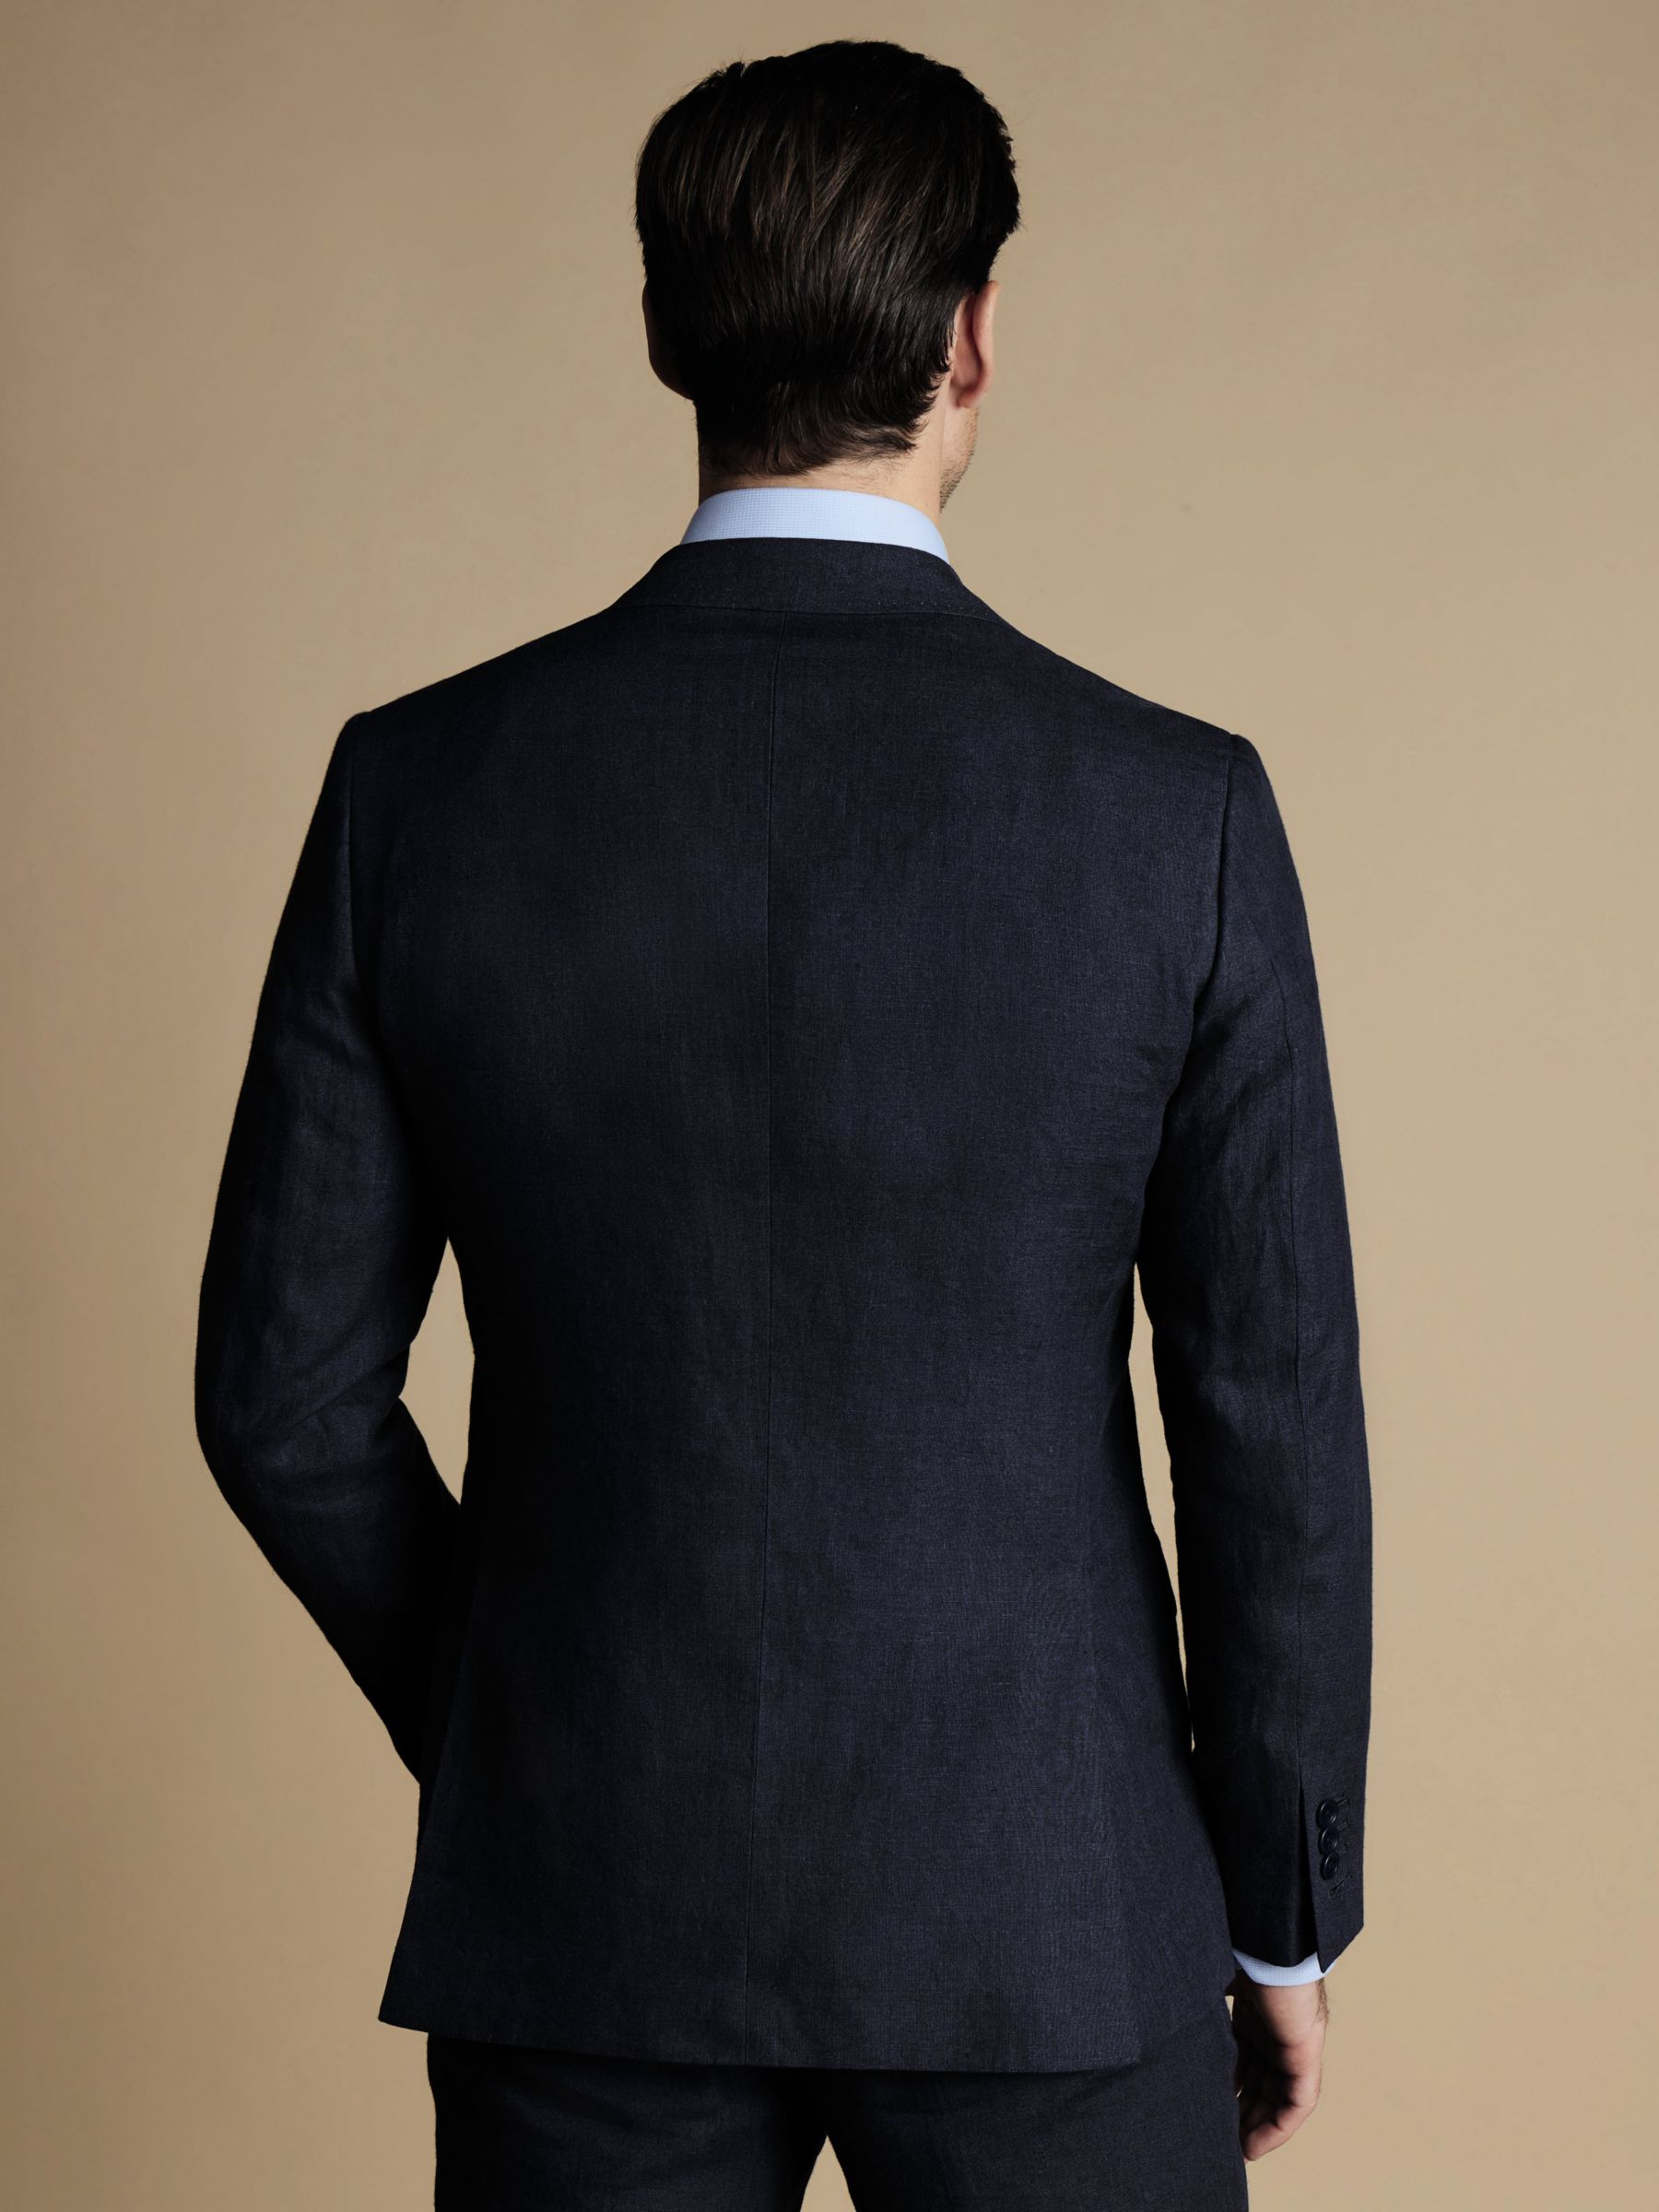 Buy Charles Tyrwhitt Slim Fit Linen Suit Jacket, Dark Navy Online at johnlewis.com